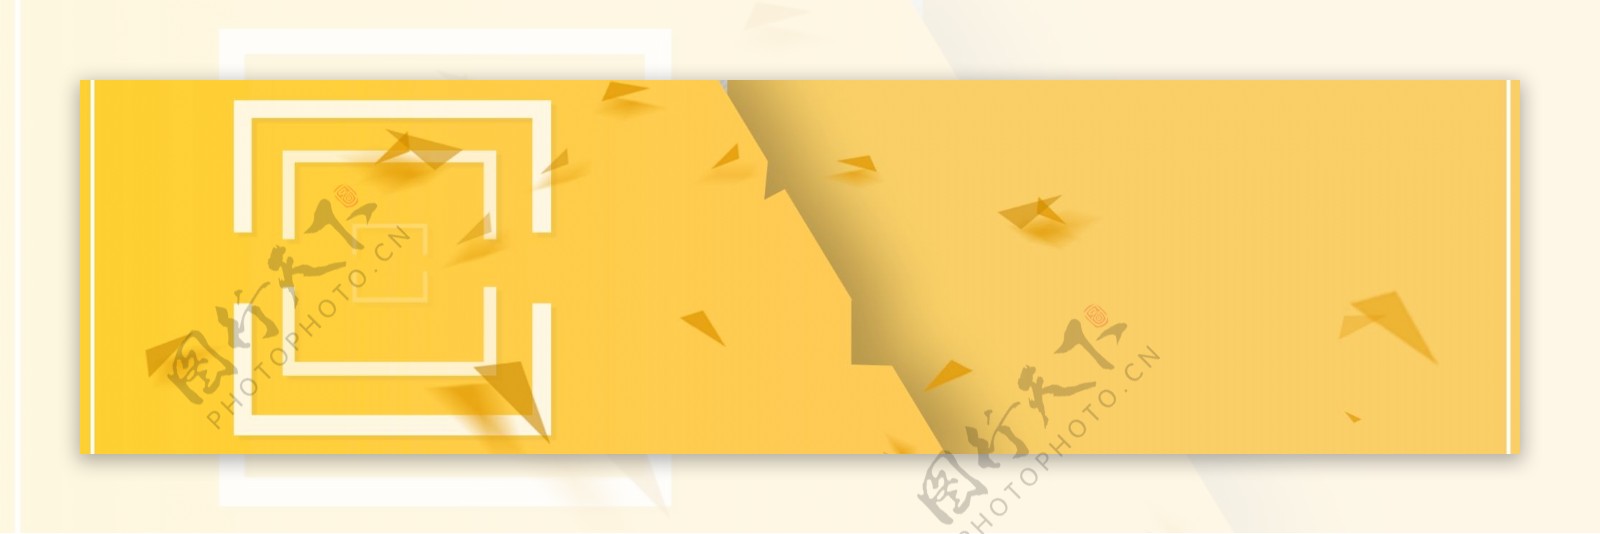 黄色菱形几何banner背景